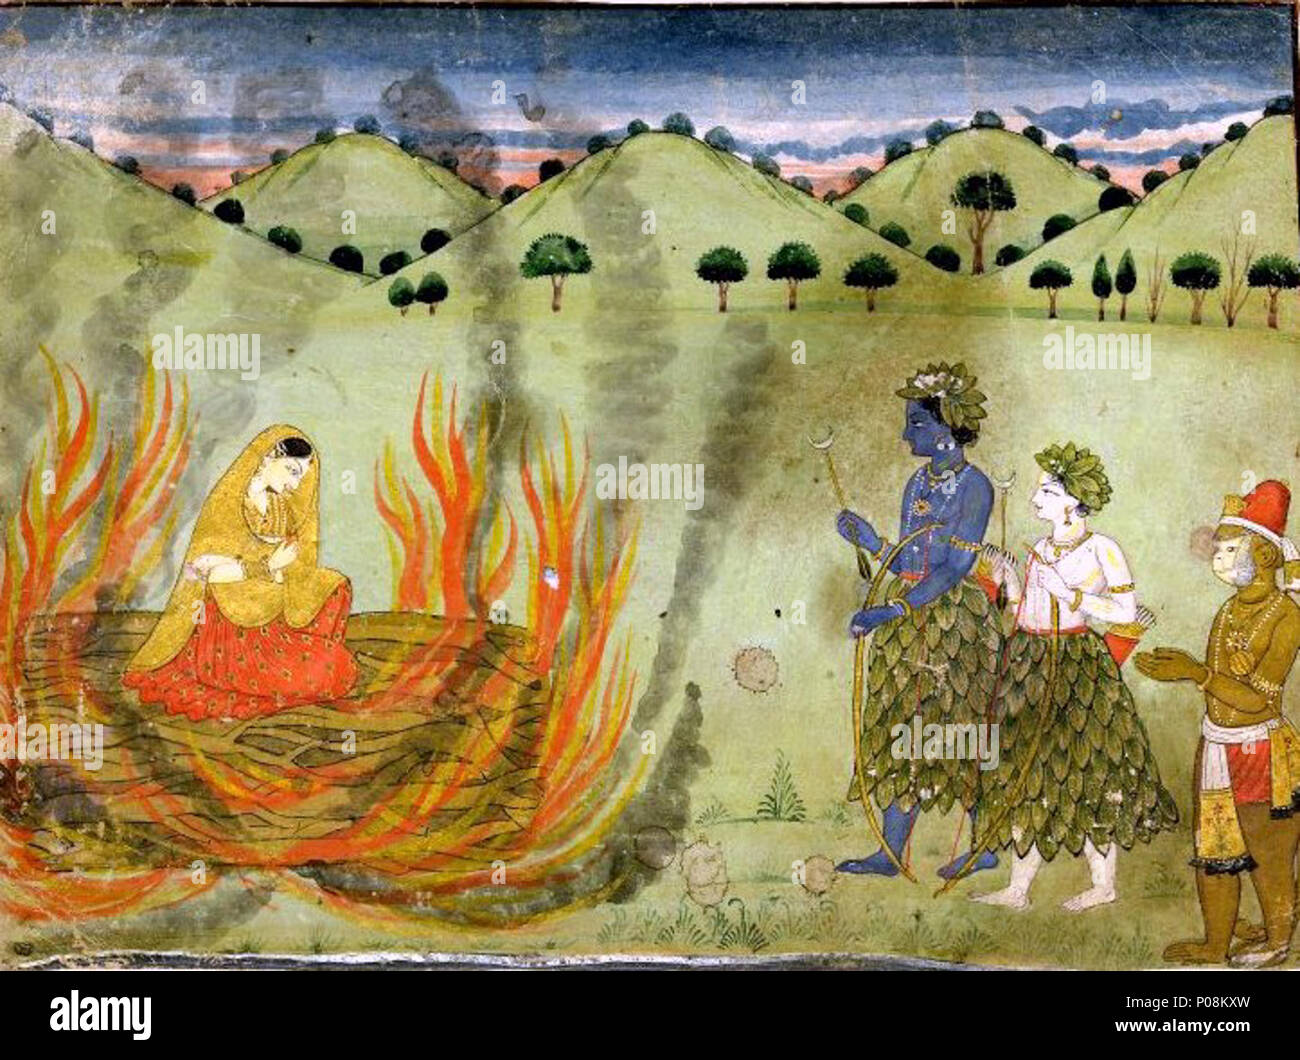 . Una scena del Ramayana: Sīta subire la prova del fuoco guardato da Rāma, Lakṣmaṇa e Hanuman. . Circa 1820 272 Agni pariksha Foto Stock